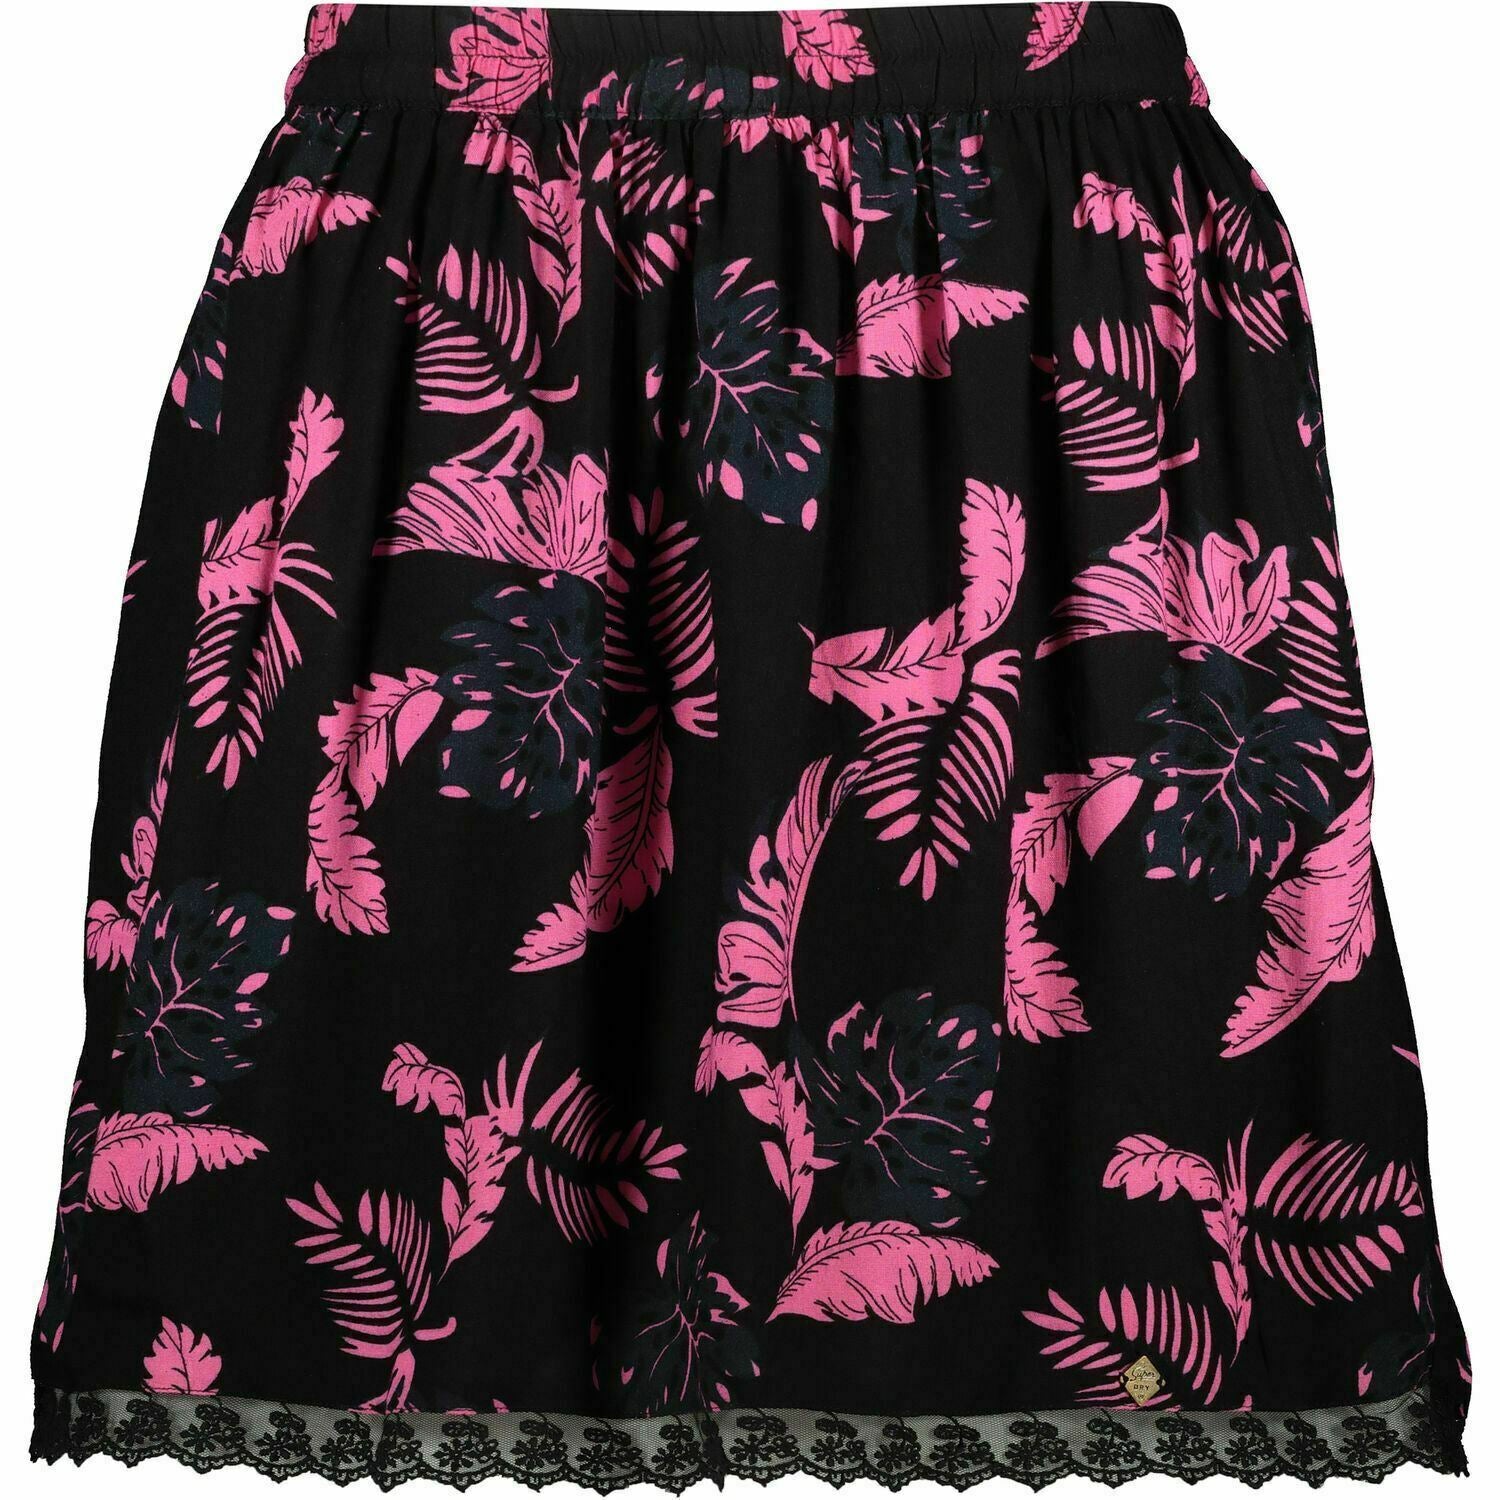 SUPERDRY Women's SERENA DITSY Skirt Black/Pink Palm Leaf Print size XS size UK 8